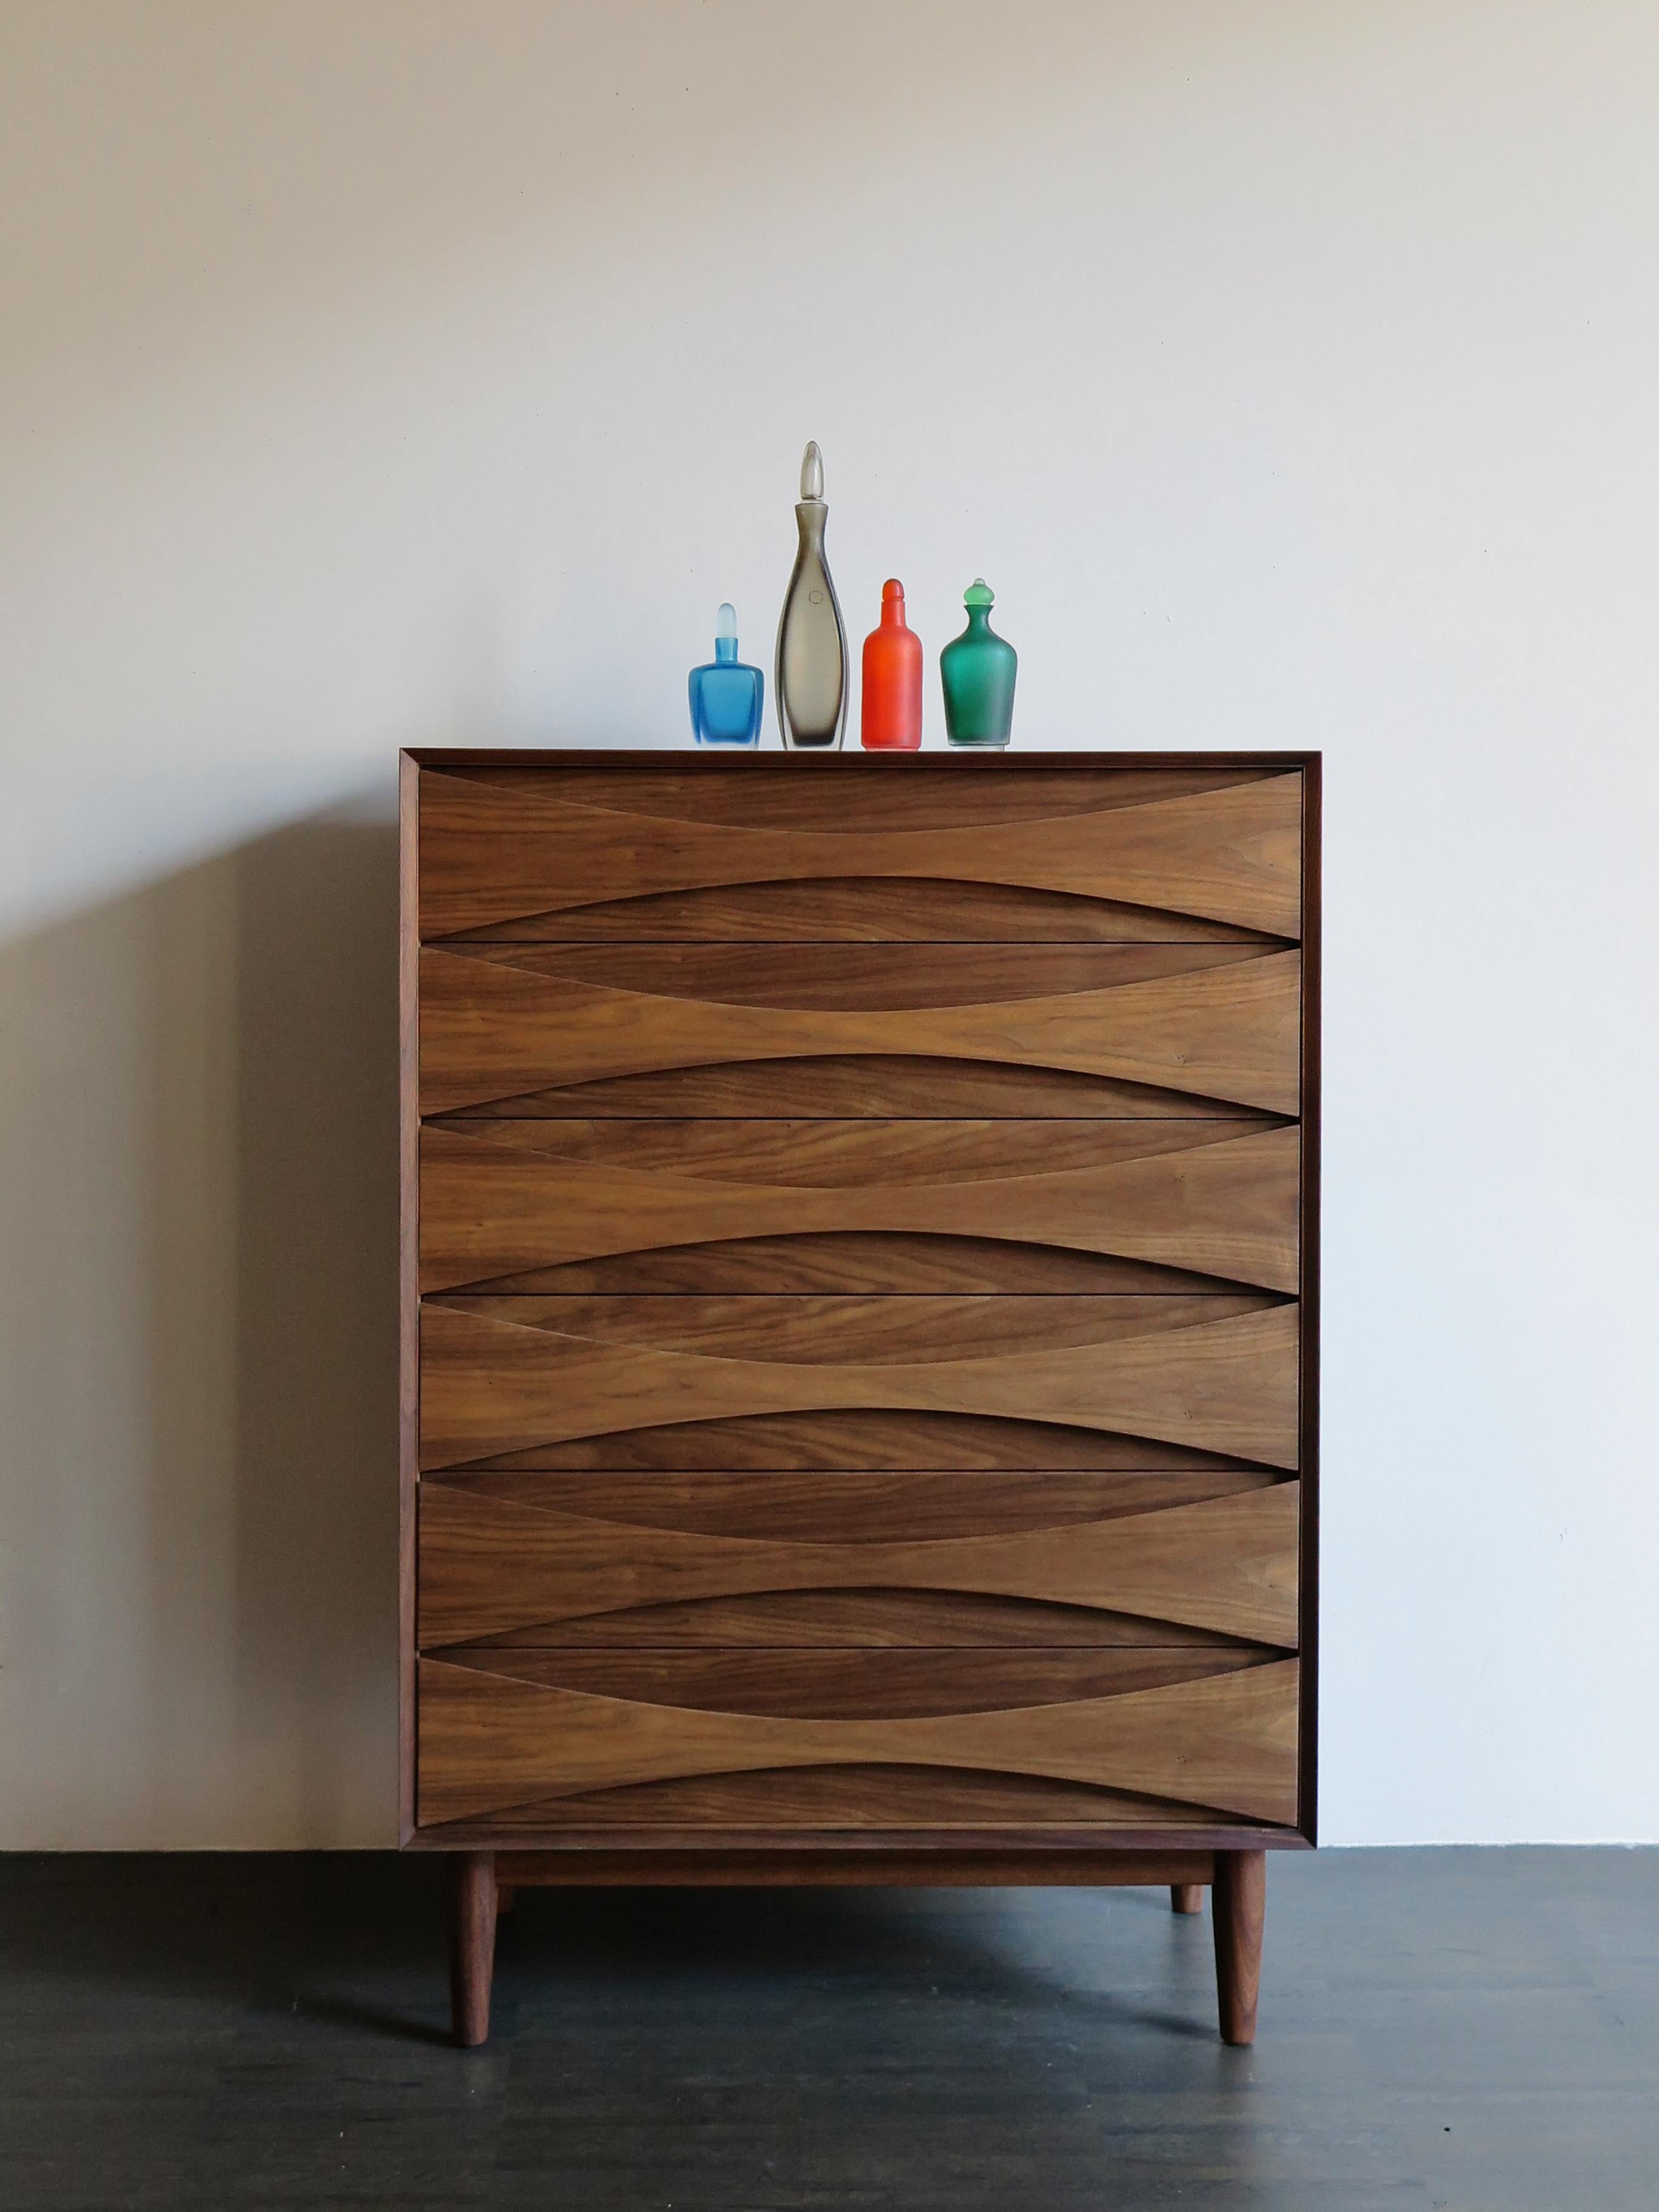 Scandinavian walnut chest of drawers designed by Danish artist Arne Vodder from 1950.